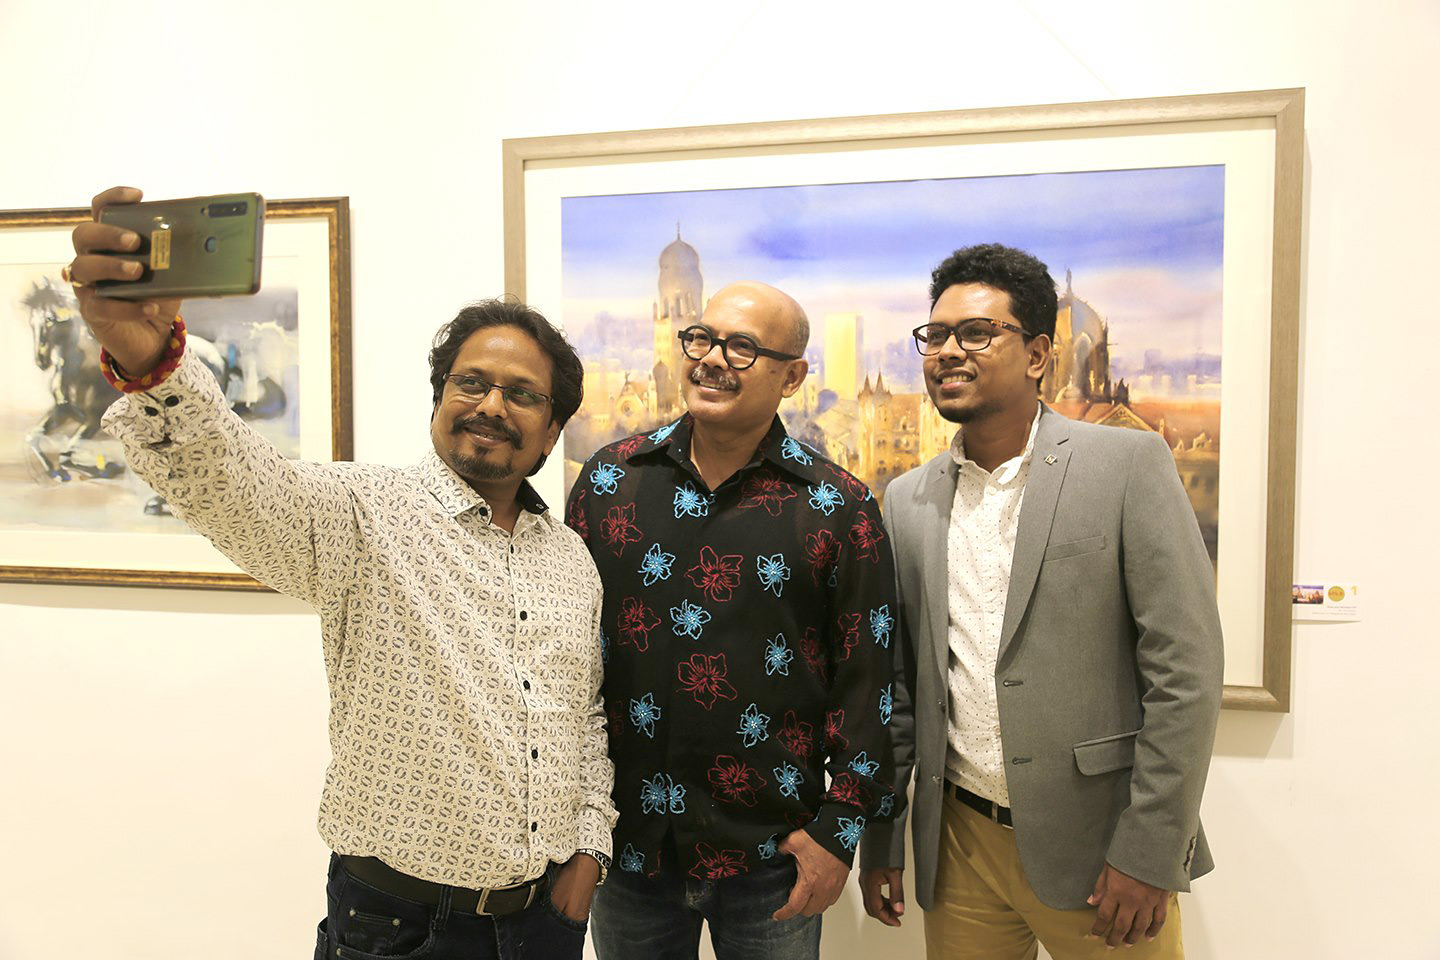  ananta-mandal-jehangir-art-gallery-mumbai-exhibition